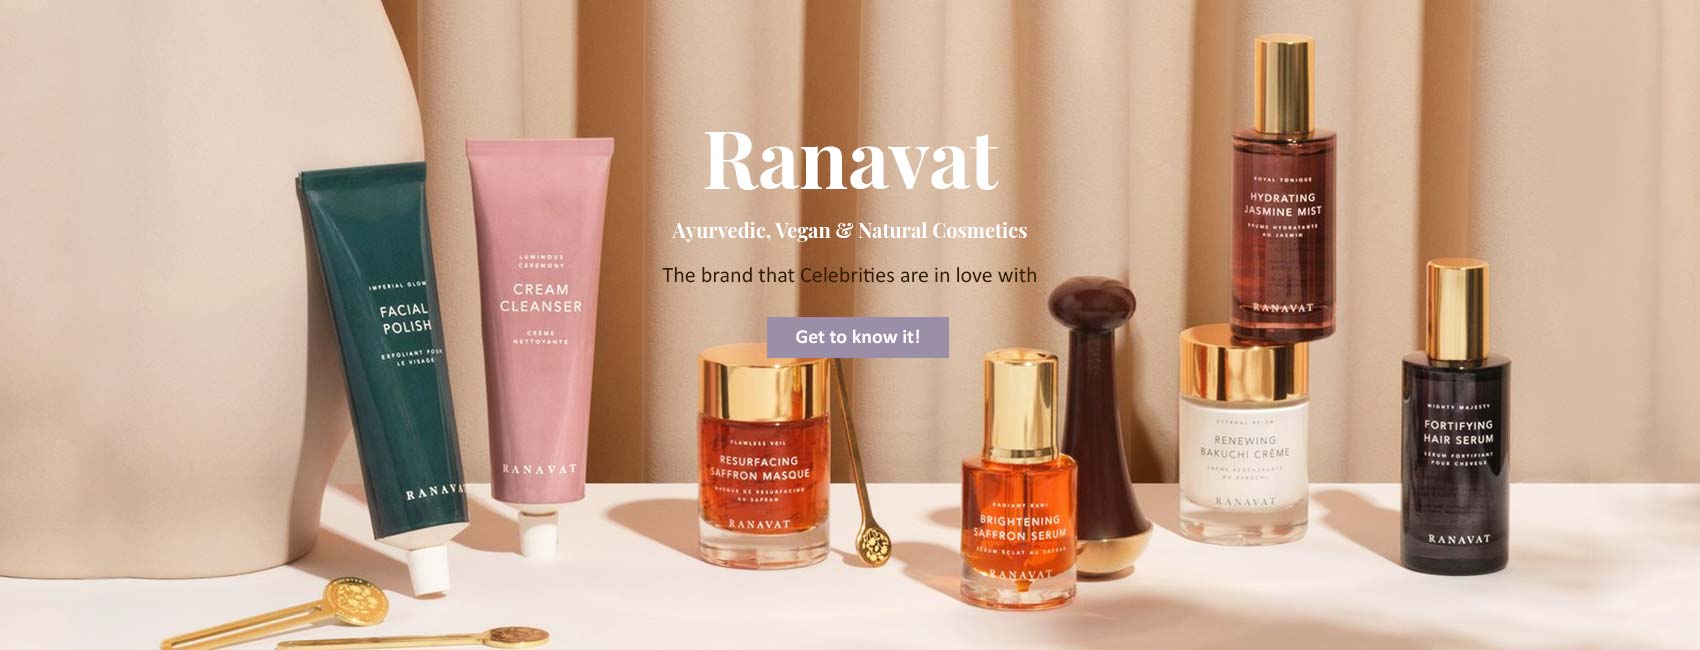 ranavat-cosmetics